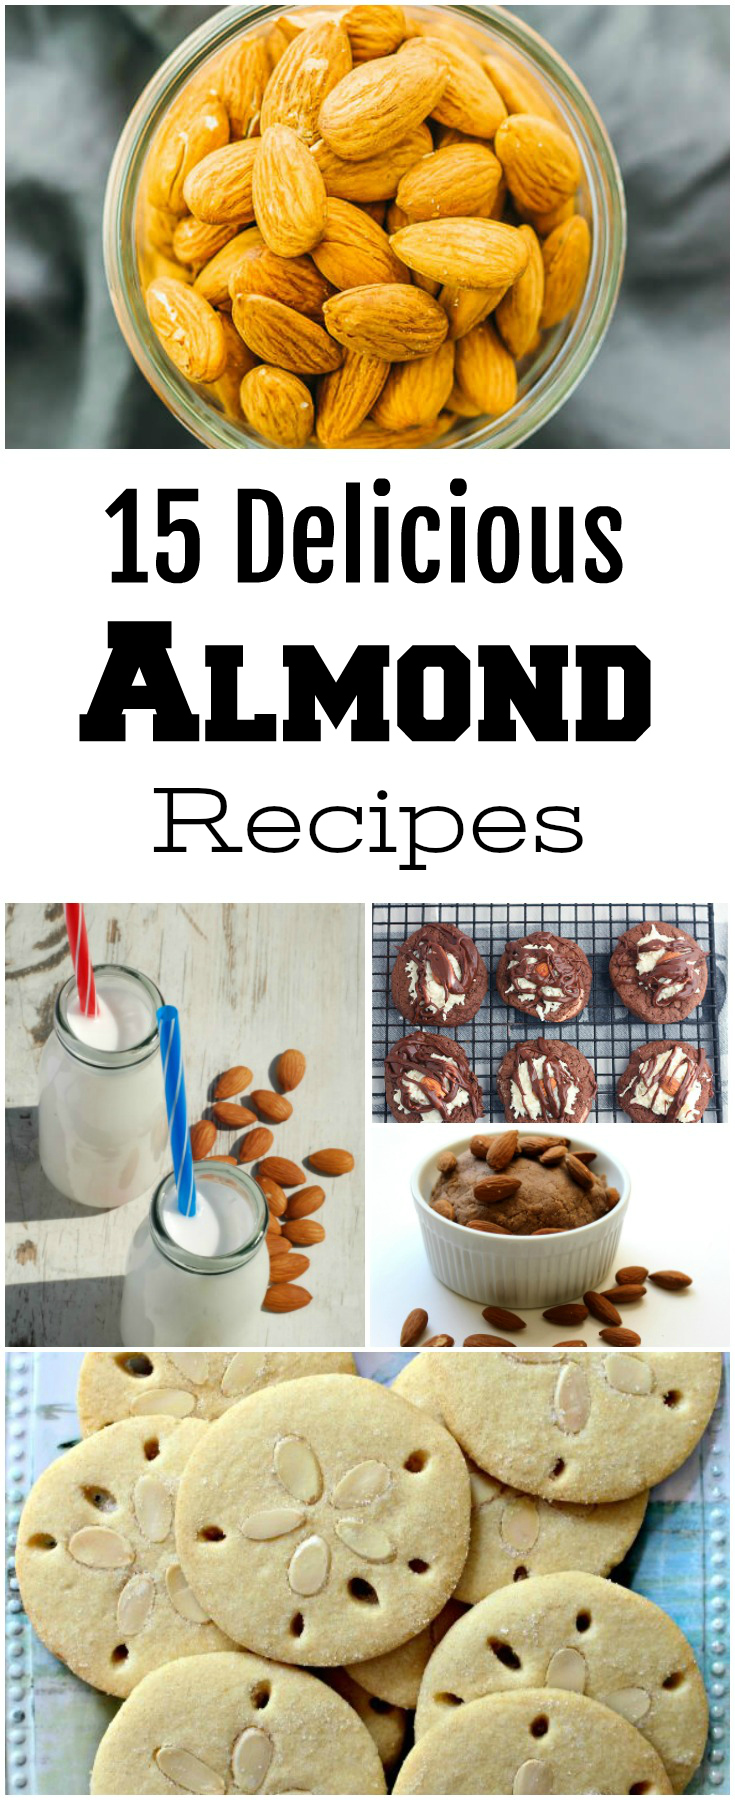 15 Delicious Almond Recipes